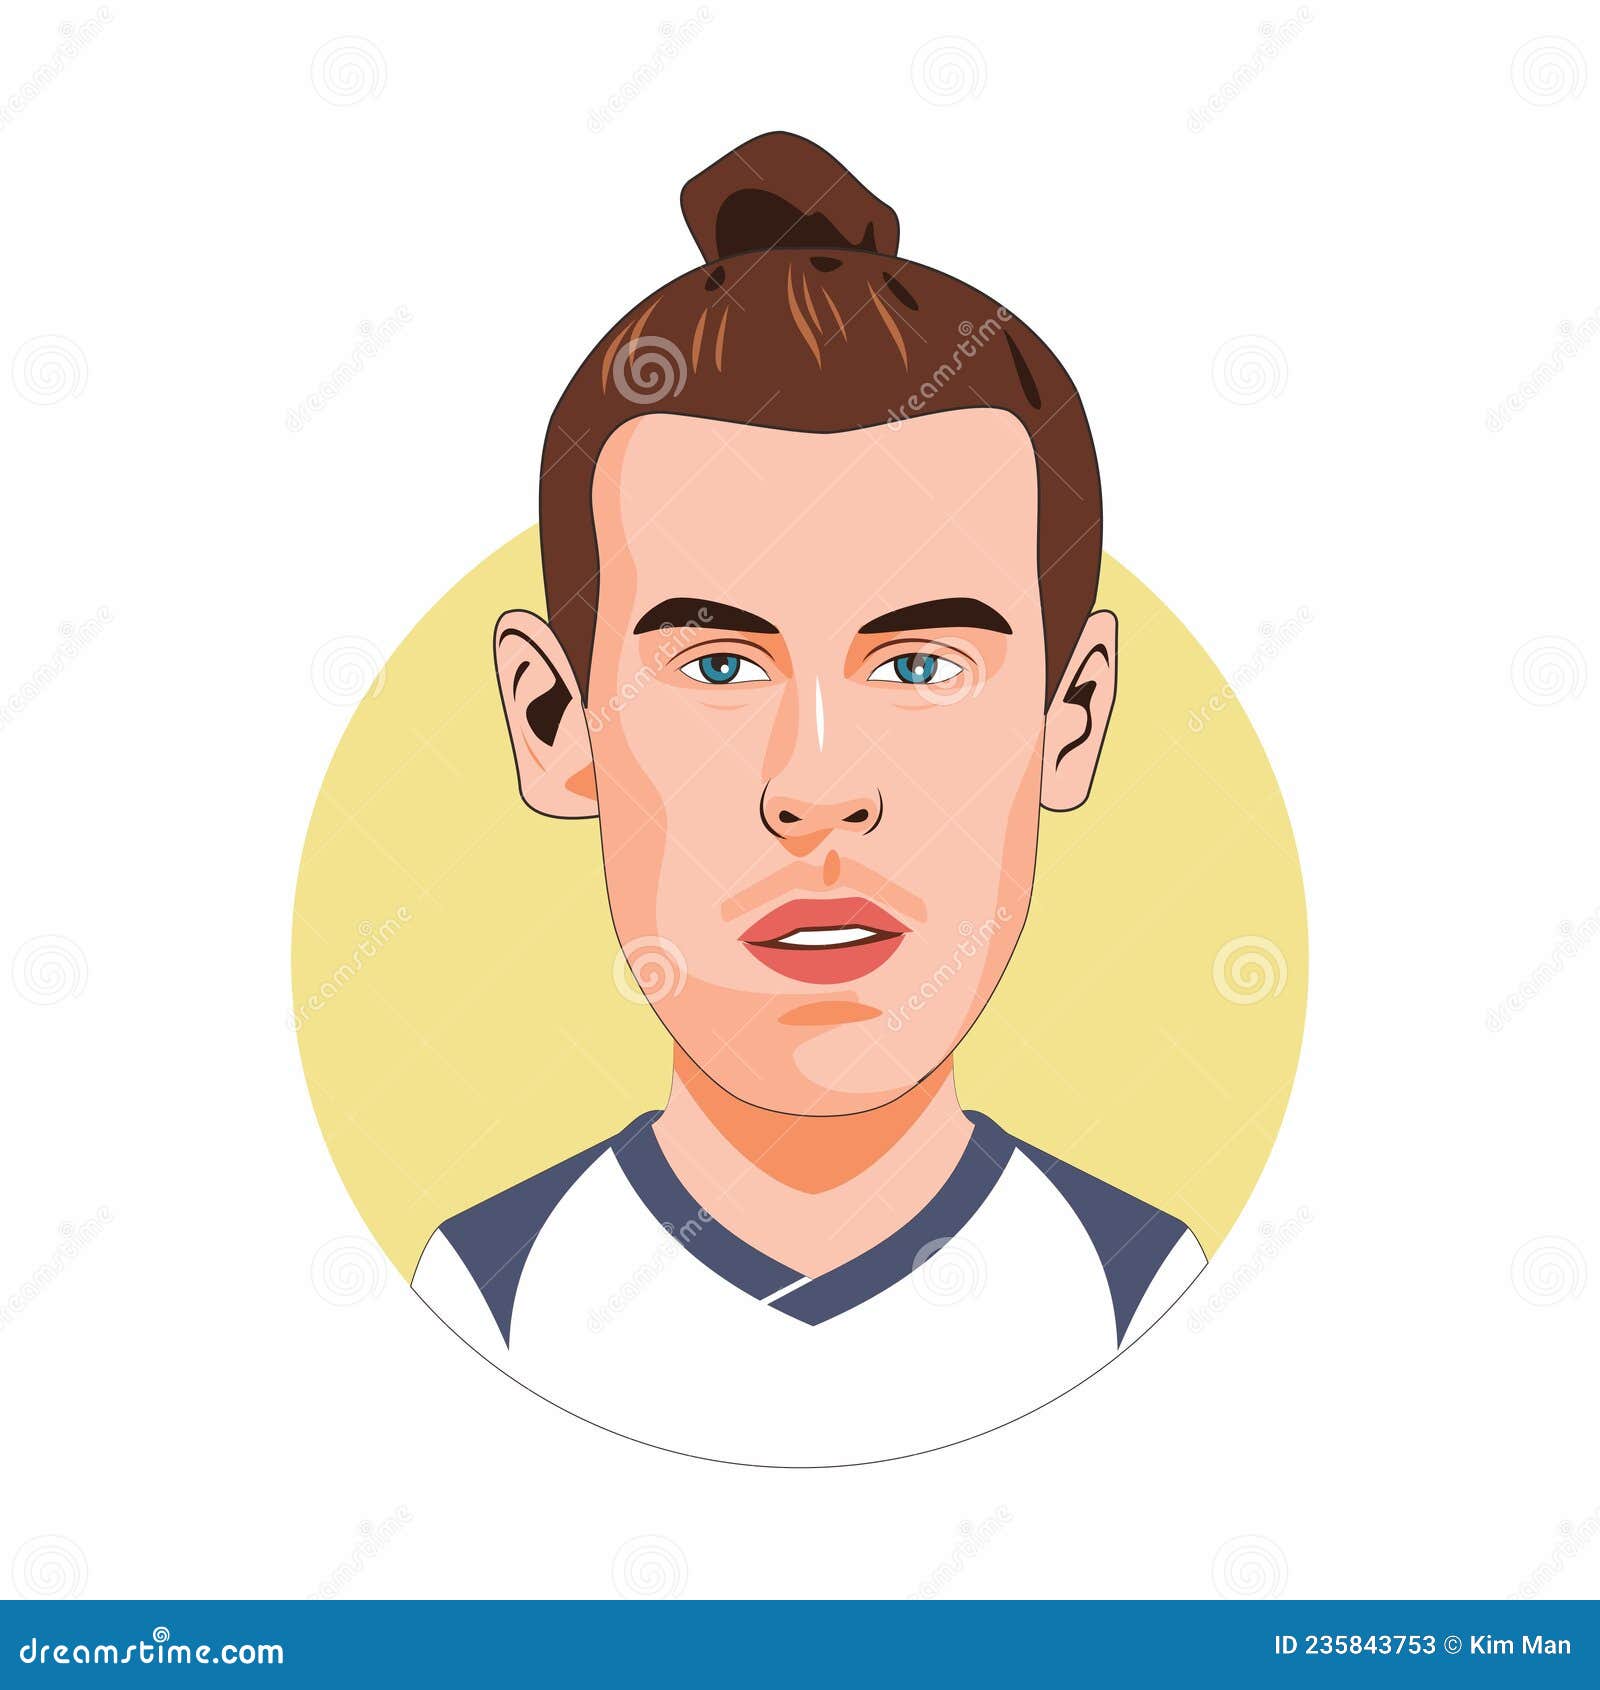 Gareth Bale Sketch Illustration, Vector Image Editorial Stock Photo ...